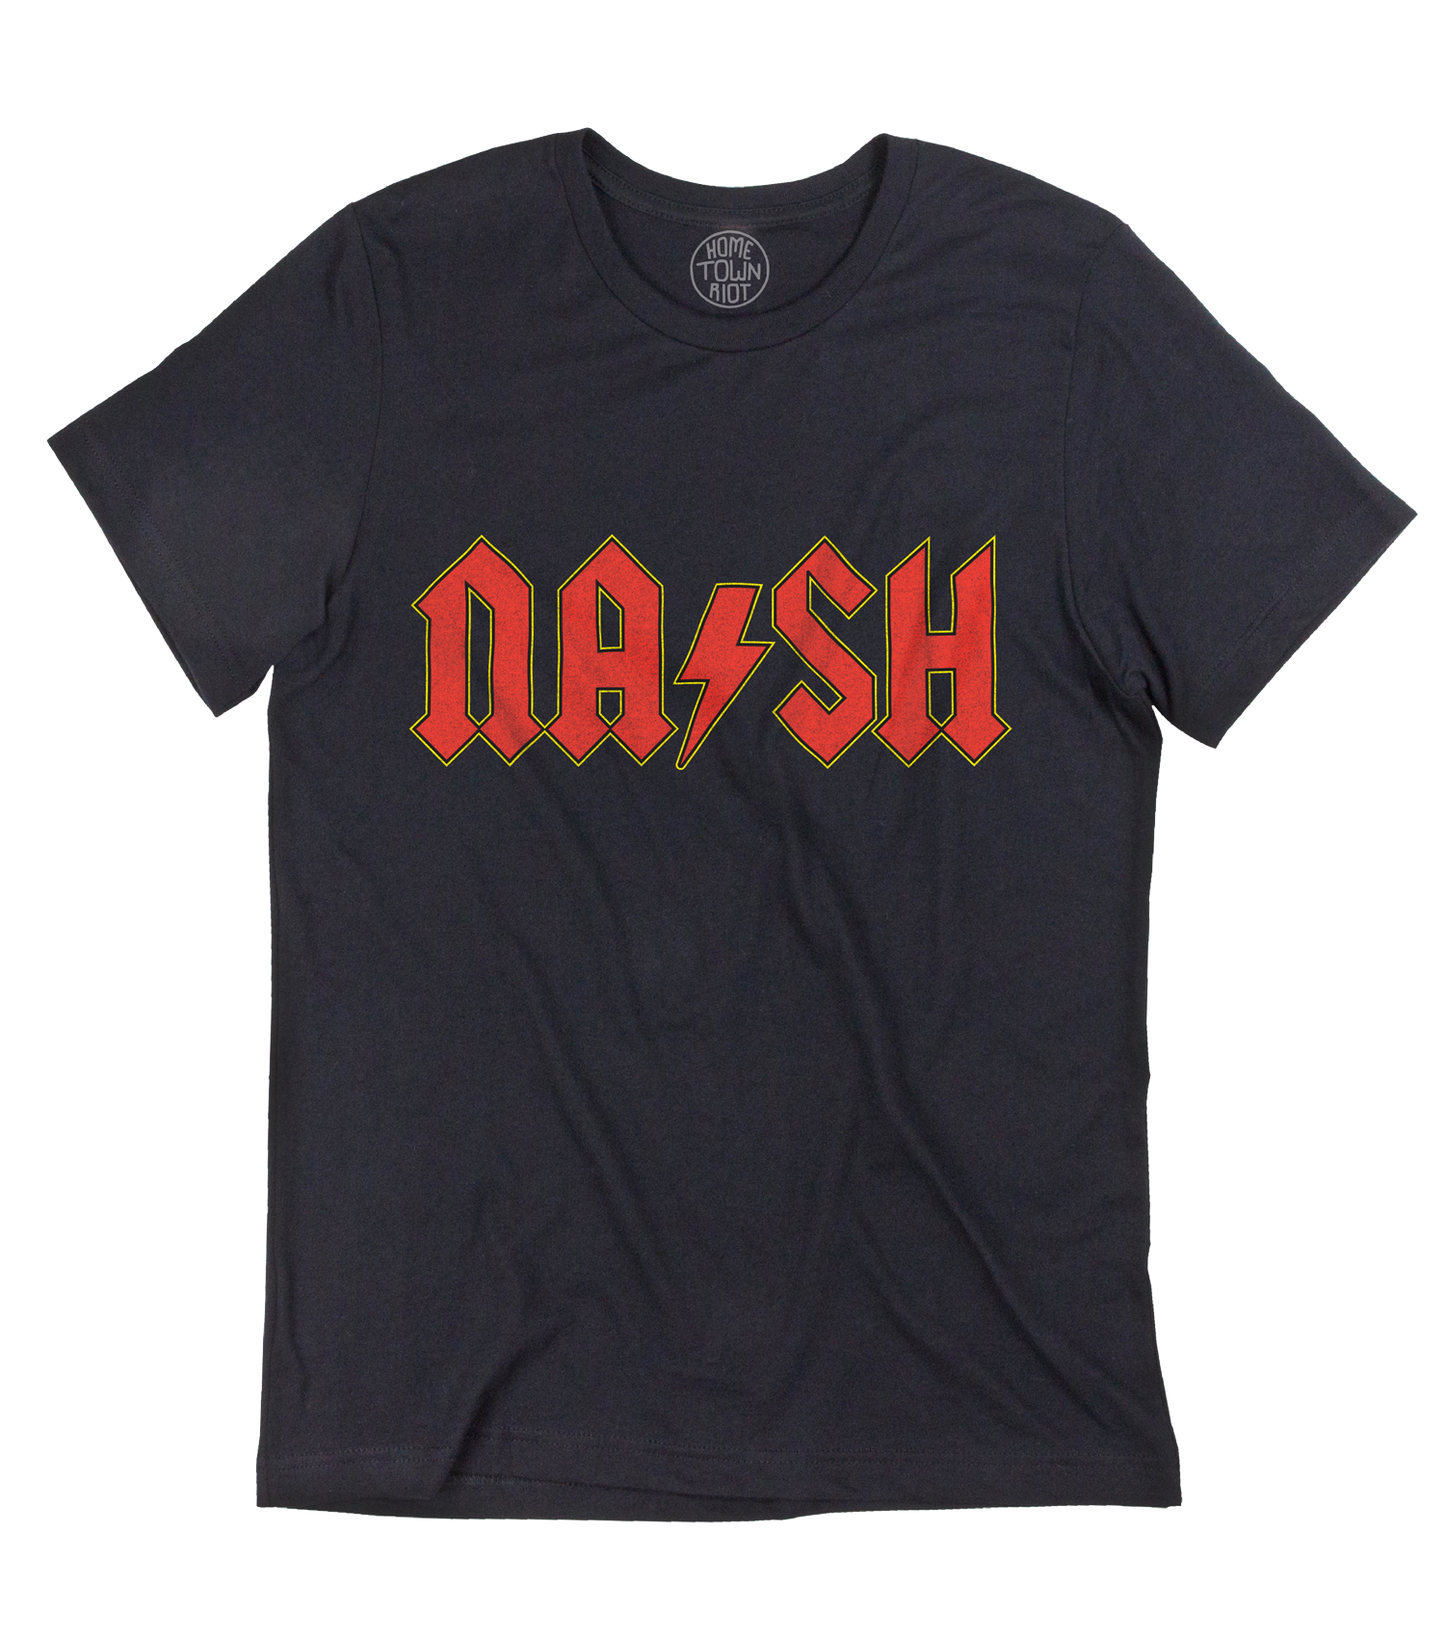 NA/SH Thunderstruck Shirt